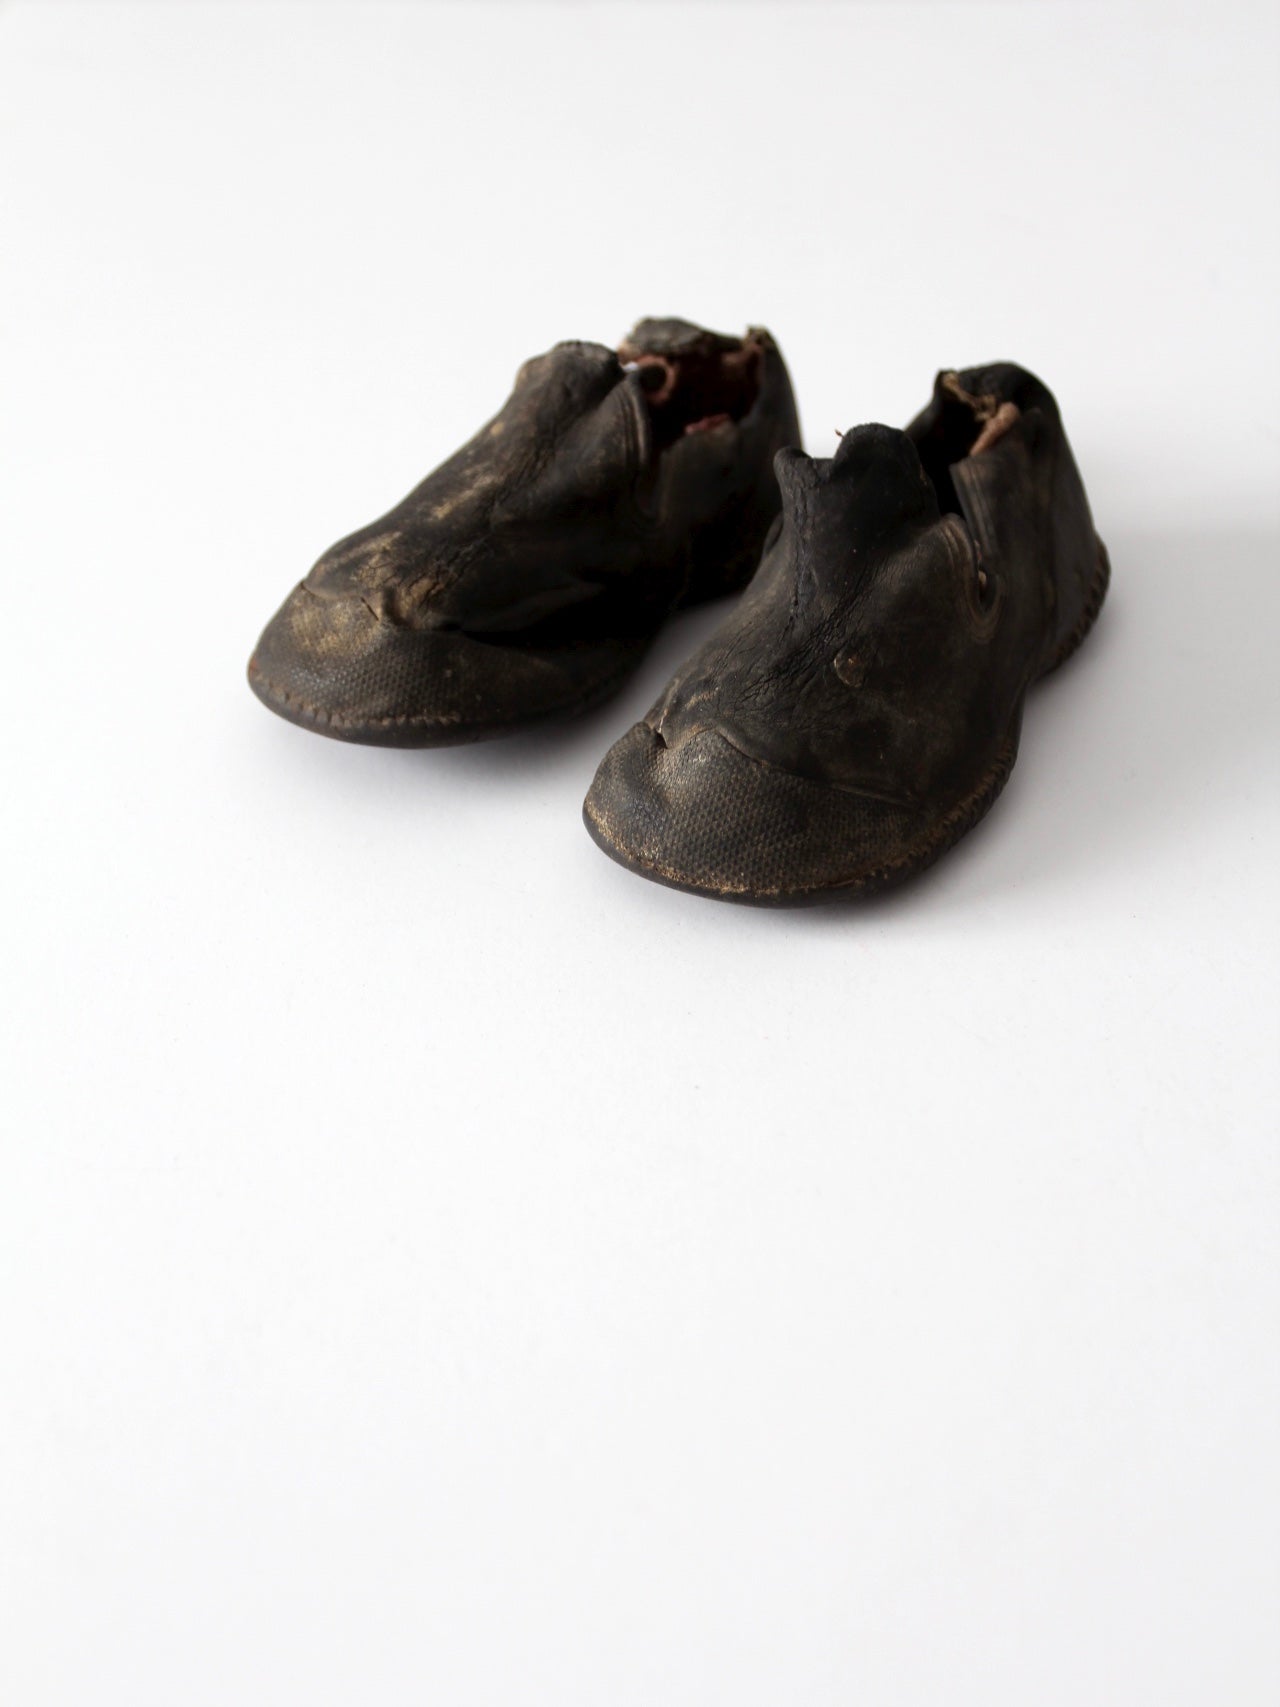 1800s rubber shoes